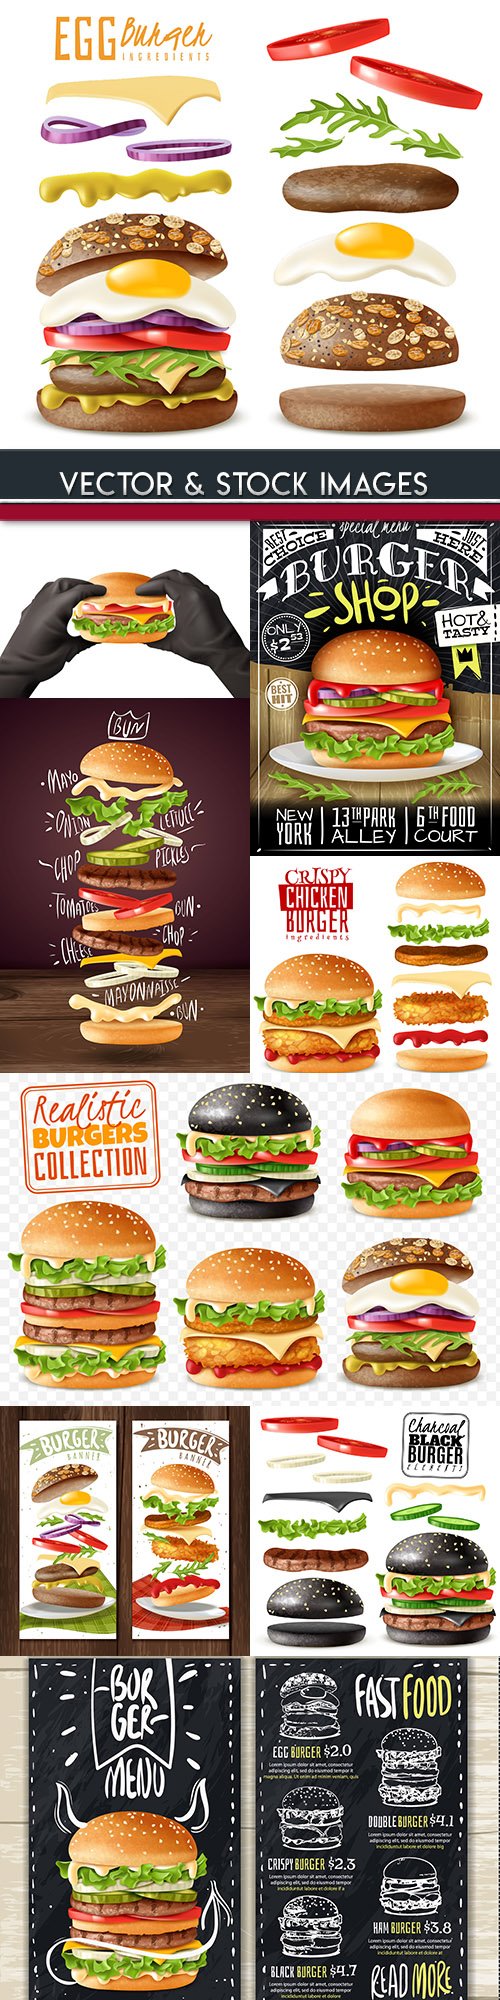 Menu burger with fillings realistic 3 d illustrations